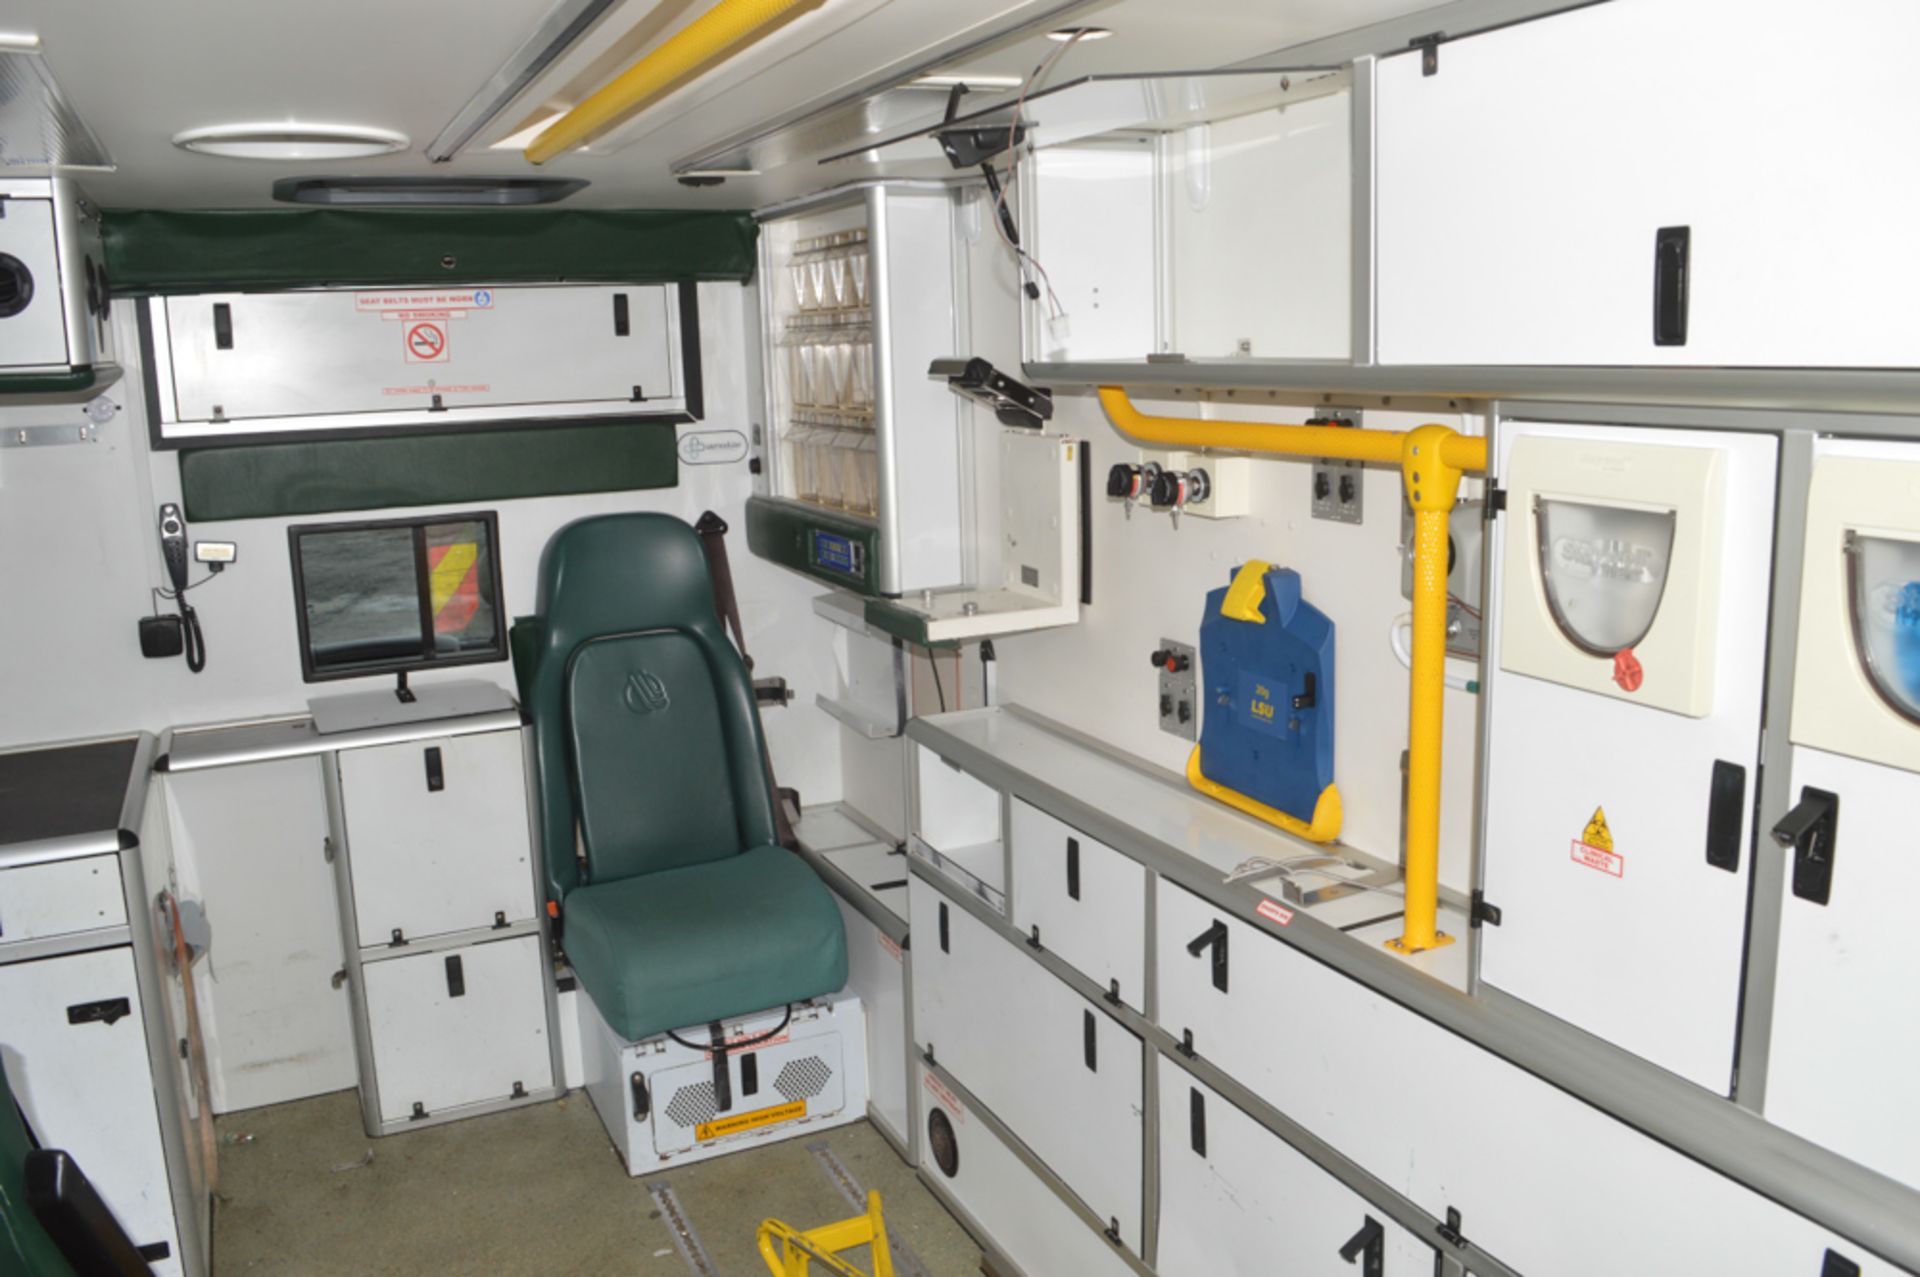 Mercedes Benz Sprinter diesel automatic ambulance (Ex North West Ambulance) Registration Number: - Image 7 of 12